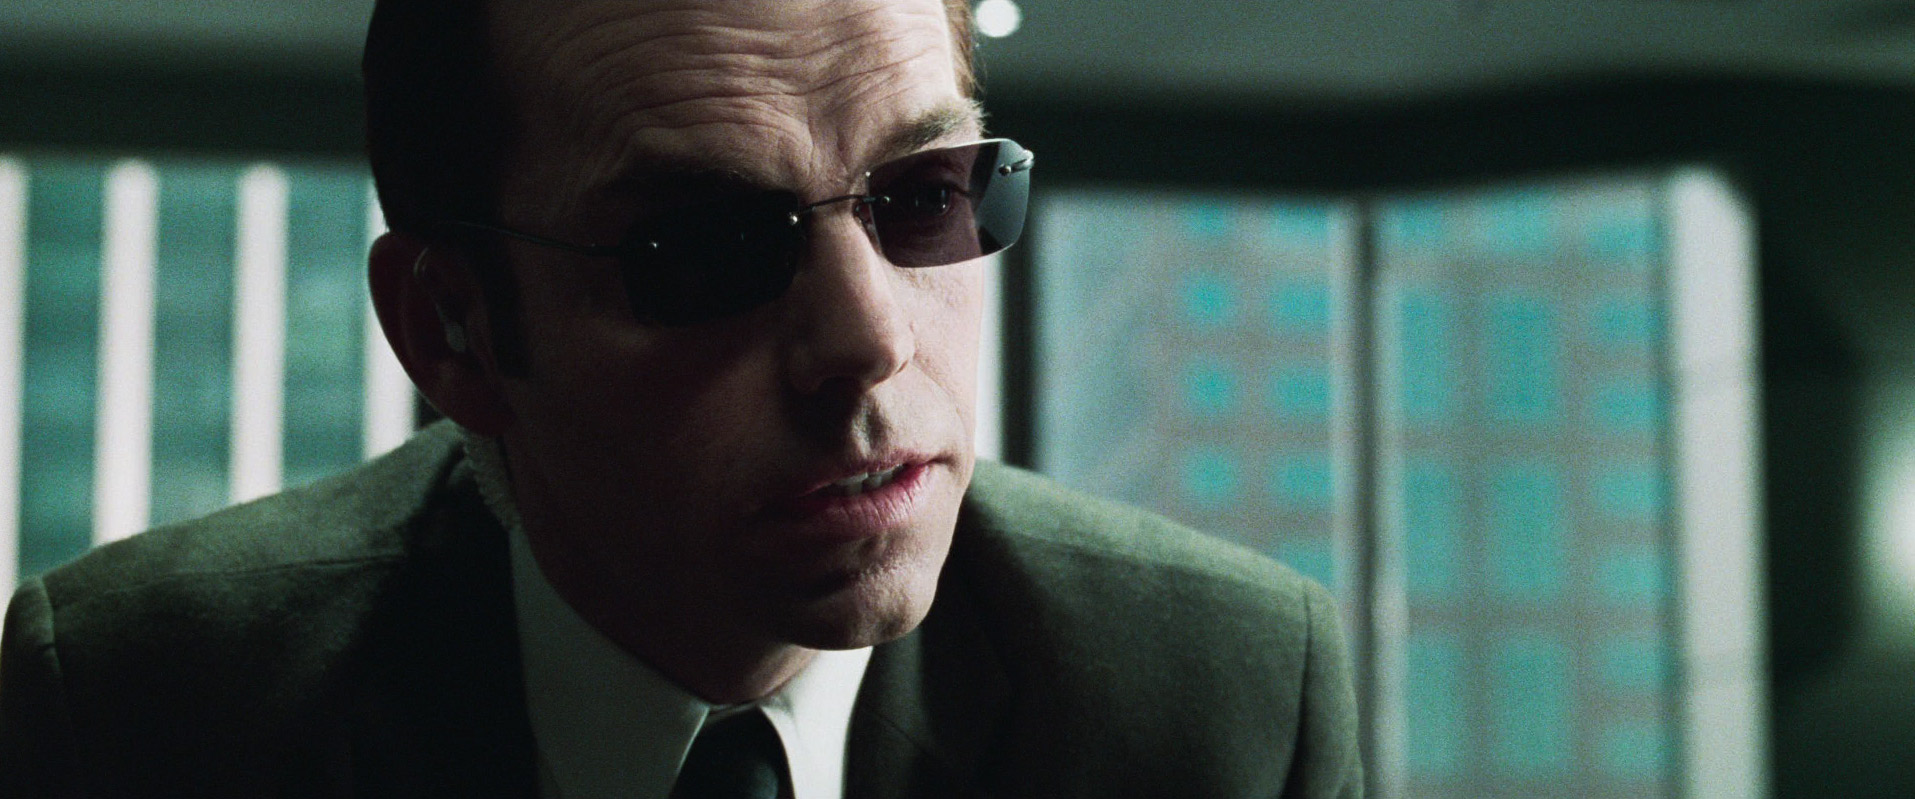 Hugo Weaving in The Matrix